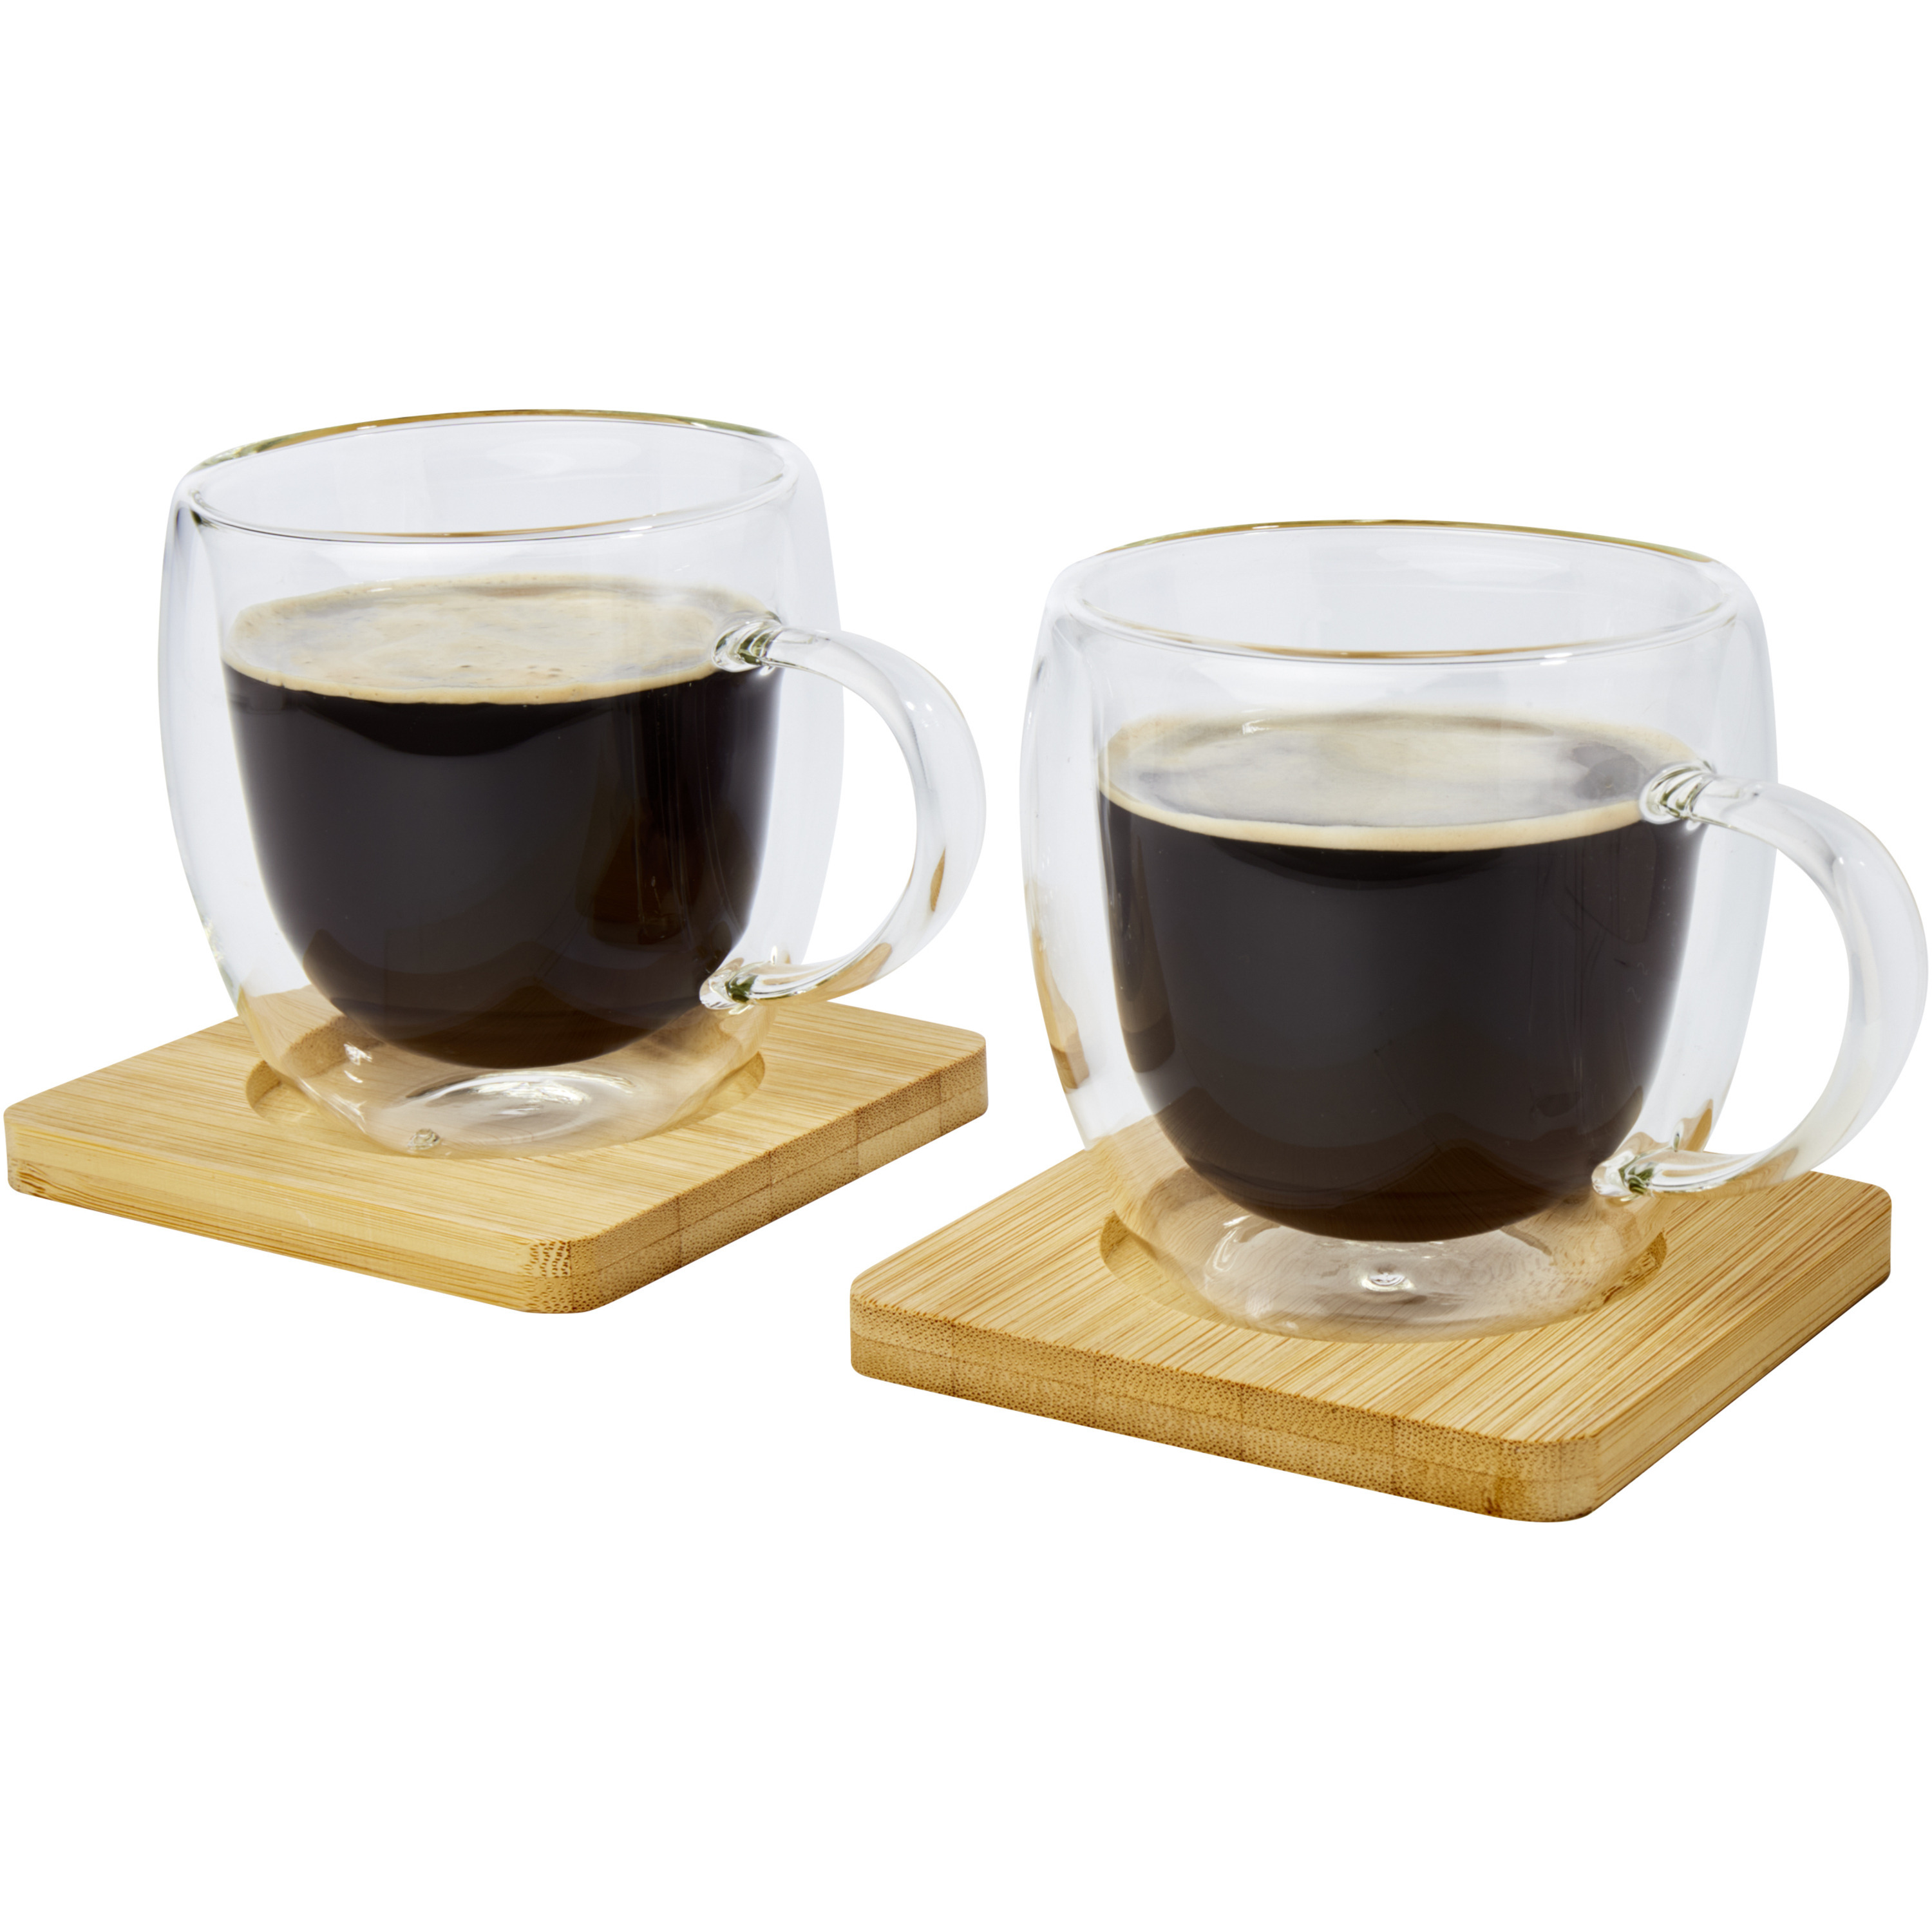 Seasons Dubbelwandige koffieglazen 250 ml set van 2x stuks met bamboe onderzetters